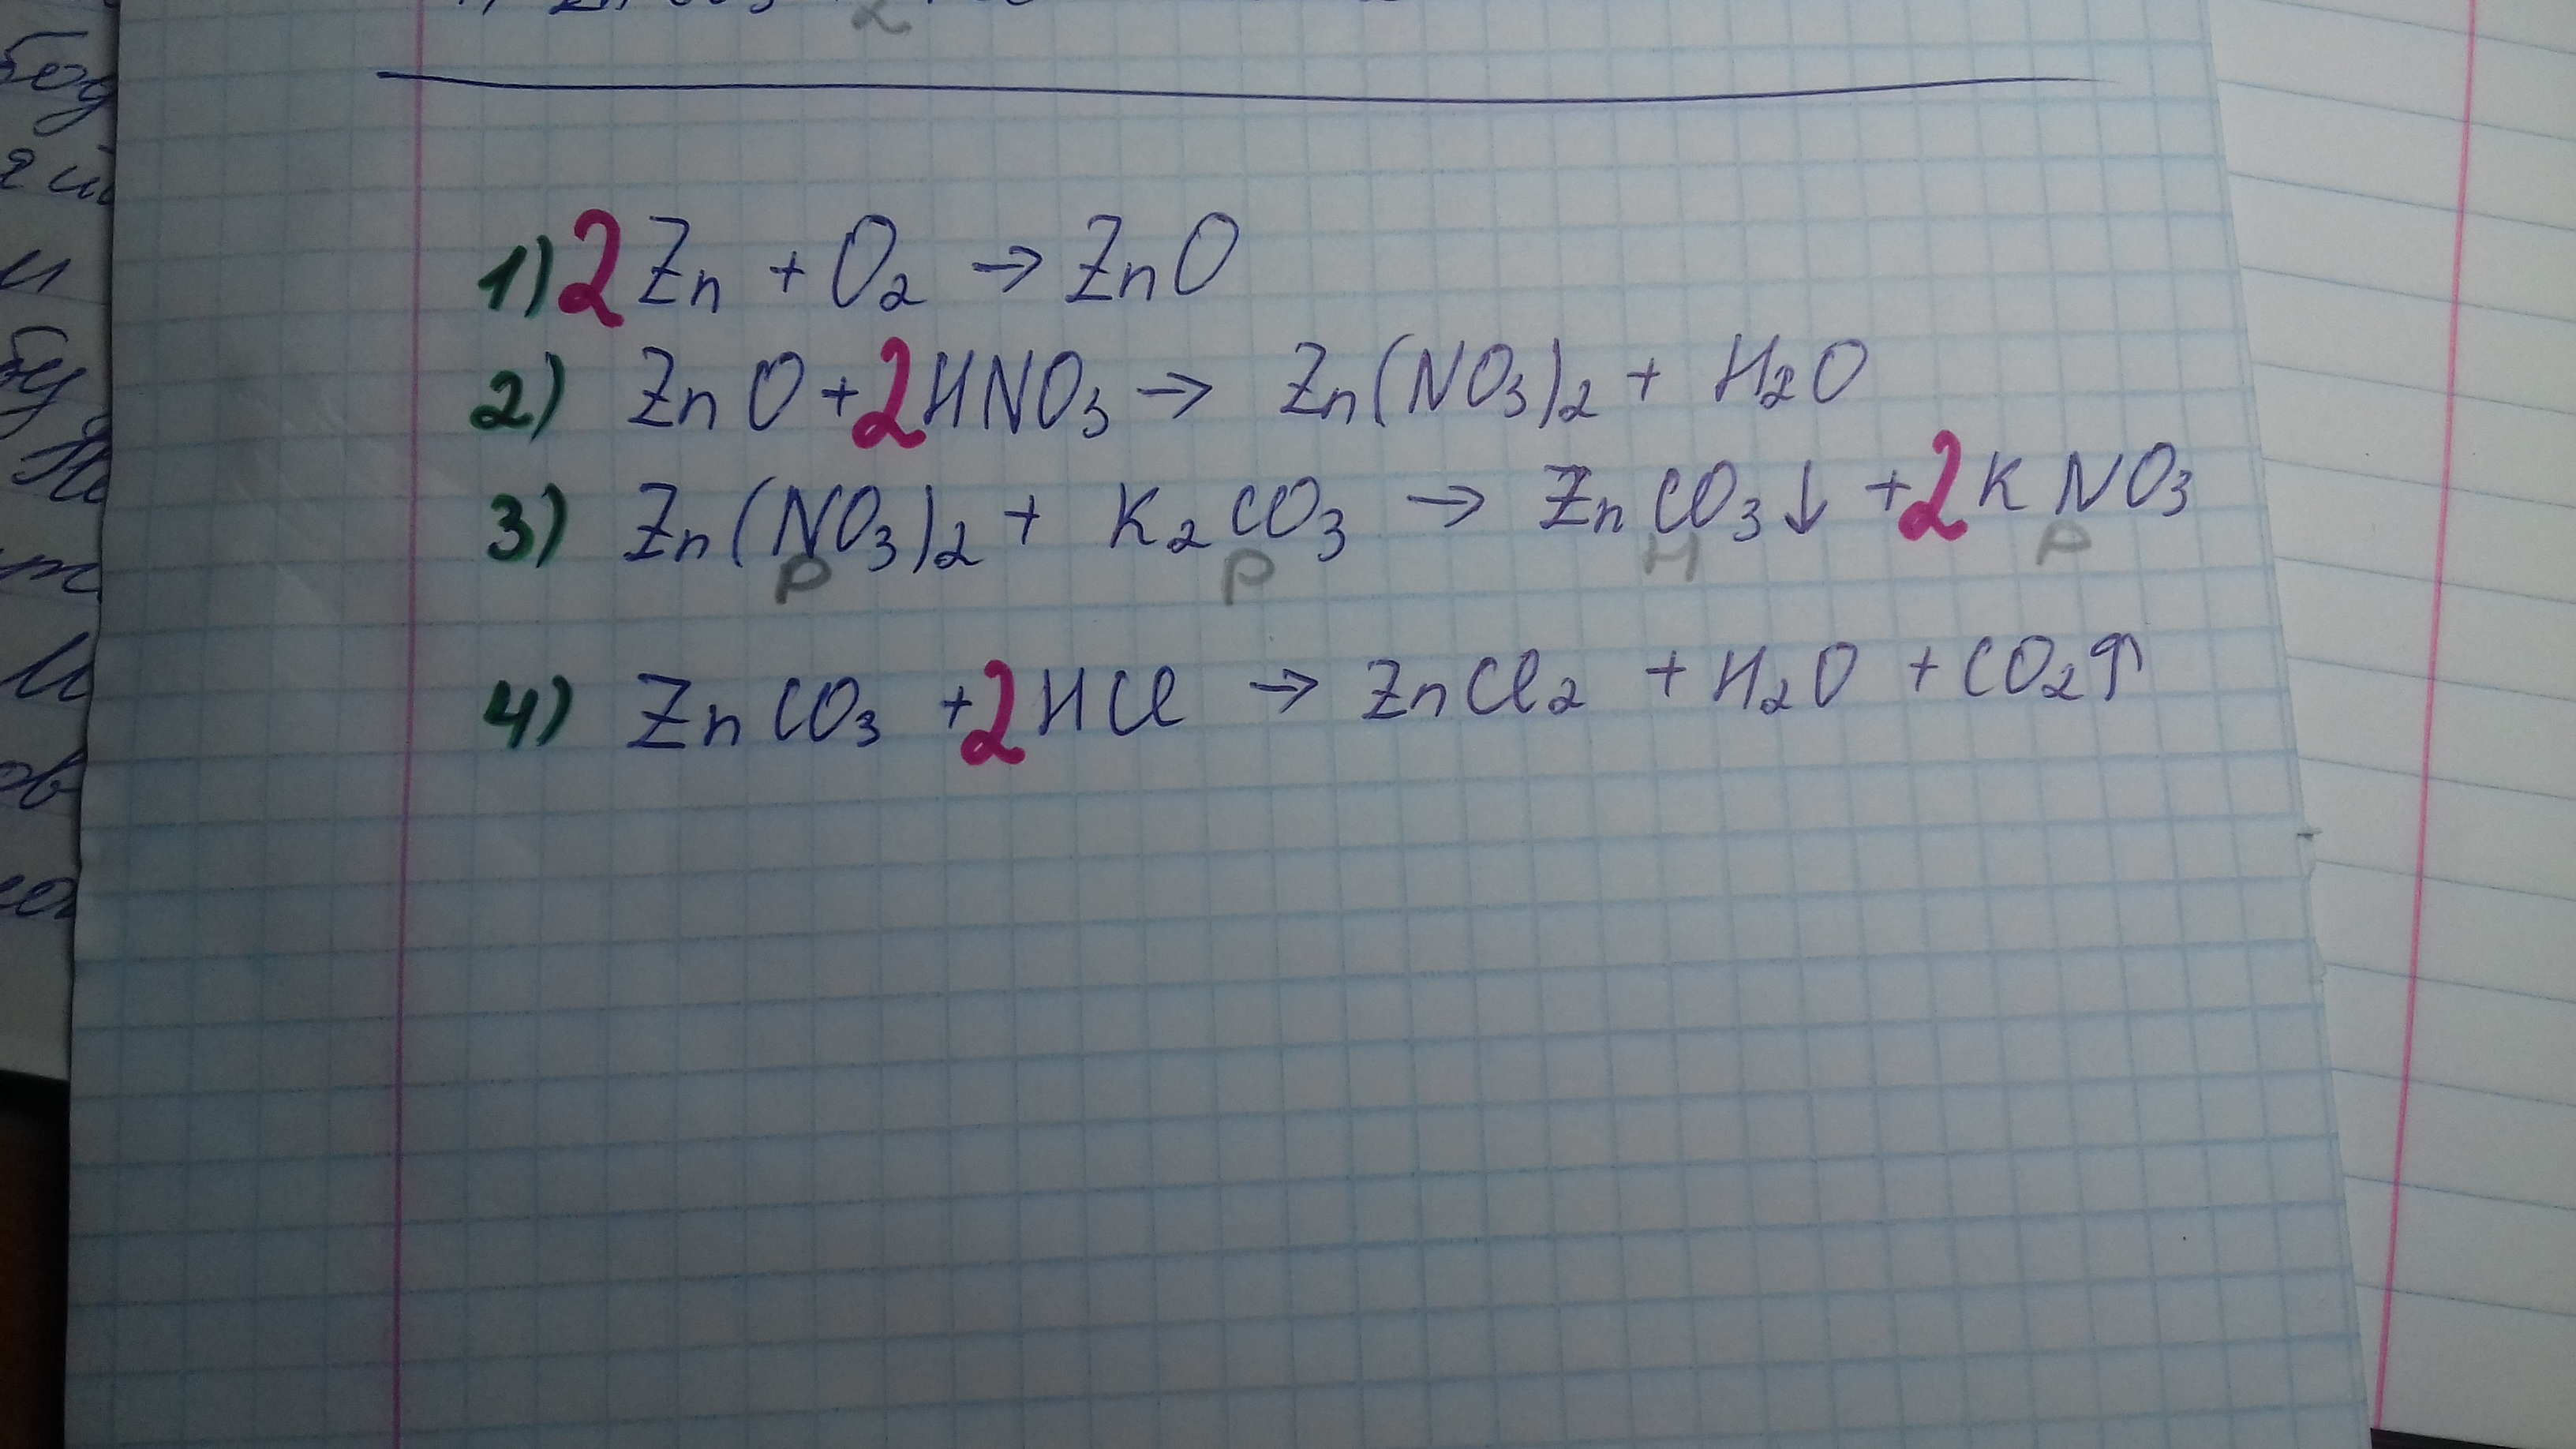 Zn zncl2 x zn oh. Уравнения превращений ZN. Осуществите превращения ZN, ZNO, zno2. Осуществите цепочку превращений ZNO zncl2 ZN. Осуществить превращение ZN ZNO.